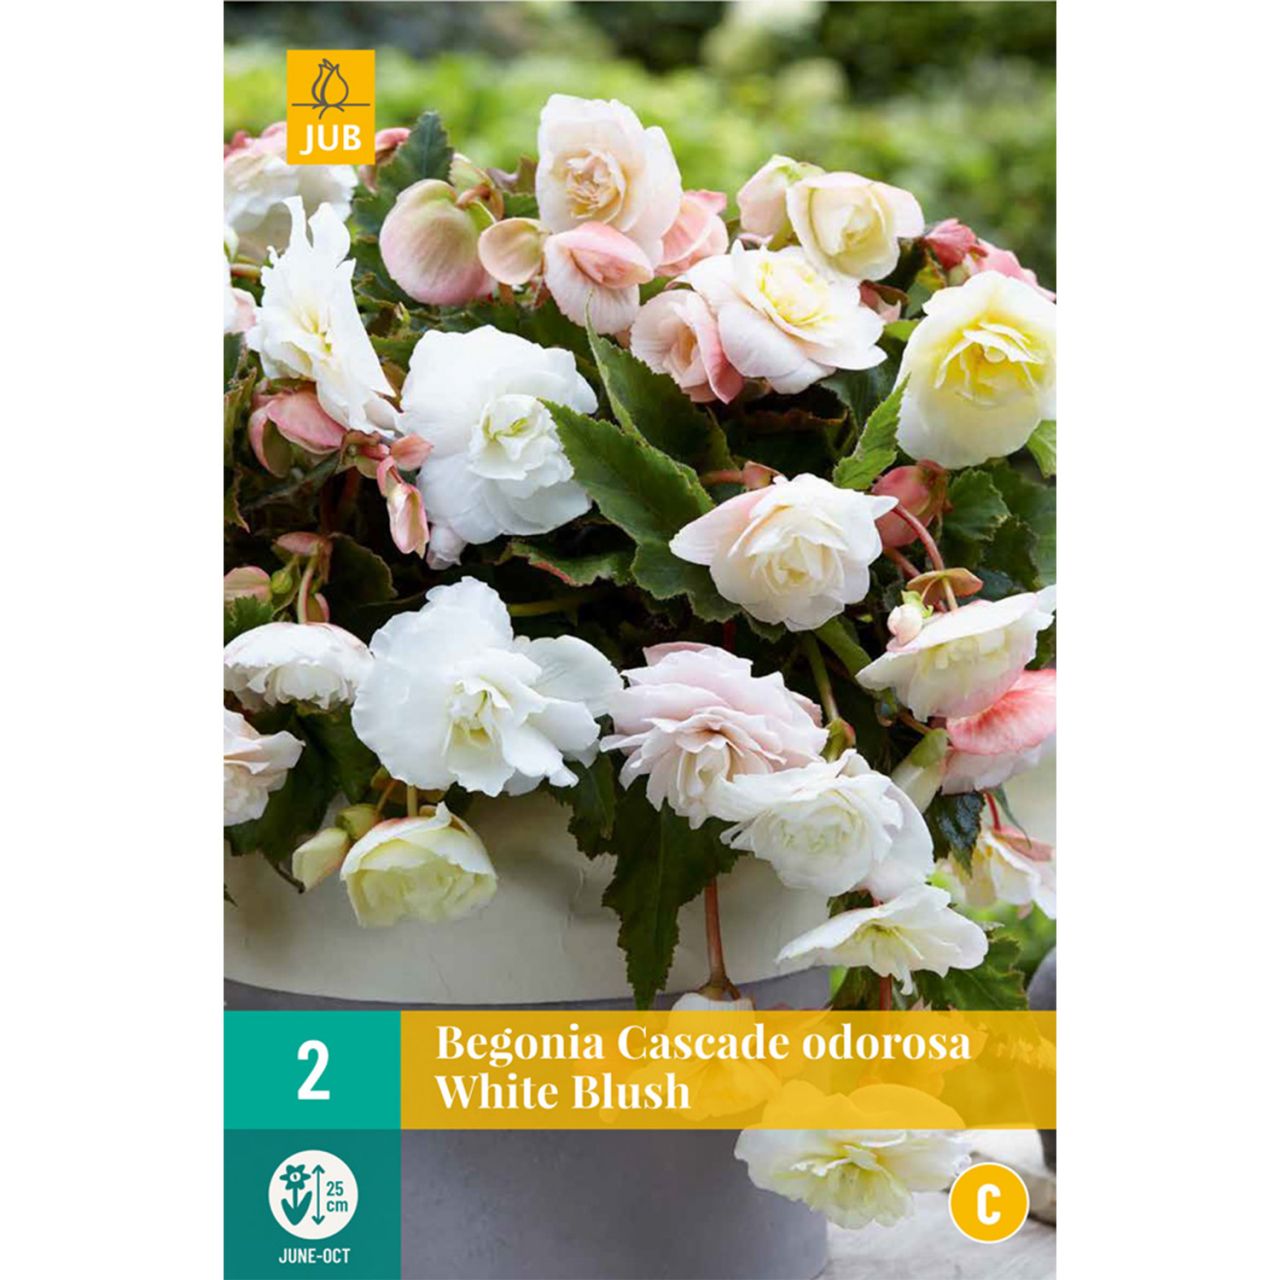 Kategorie <b>Frühlings-Blumenzwiebeln </b> - Duftende Kaskadenbegonie 'White Blush', 2 Stück - Begonia cascade odorosa 'White Blush'